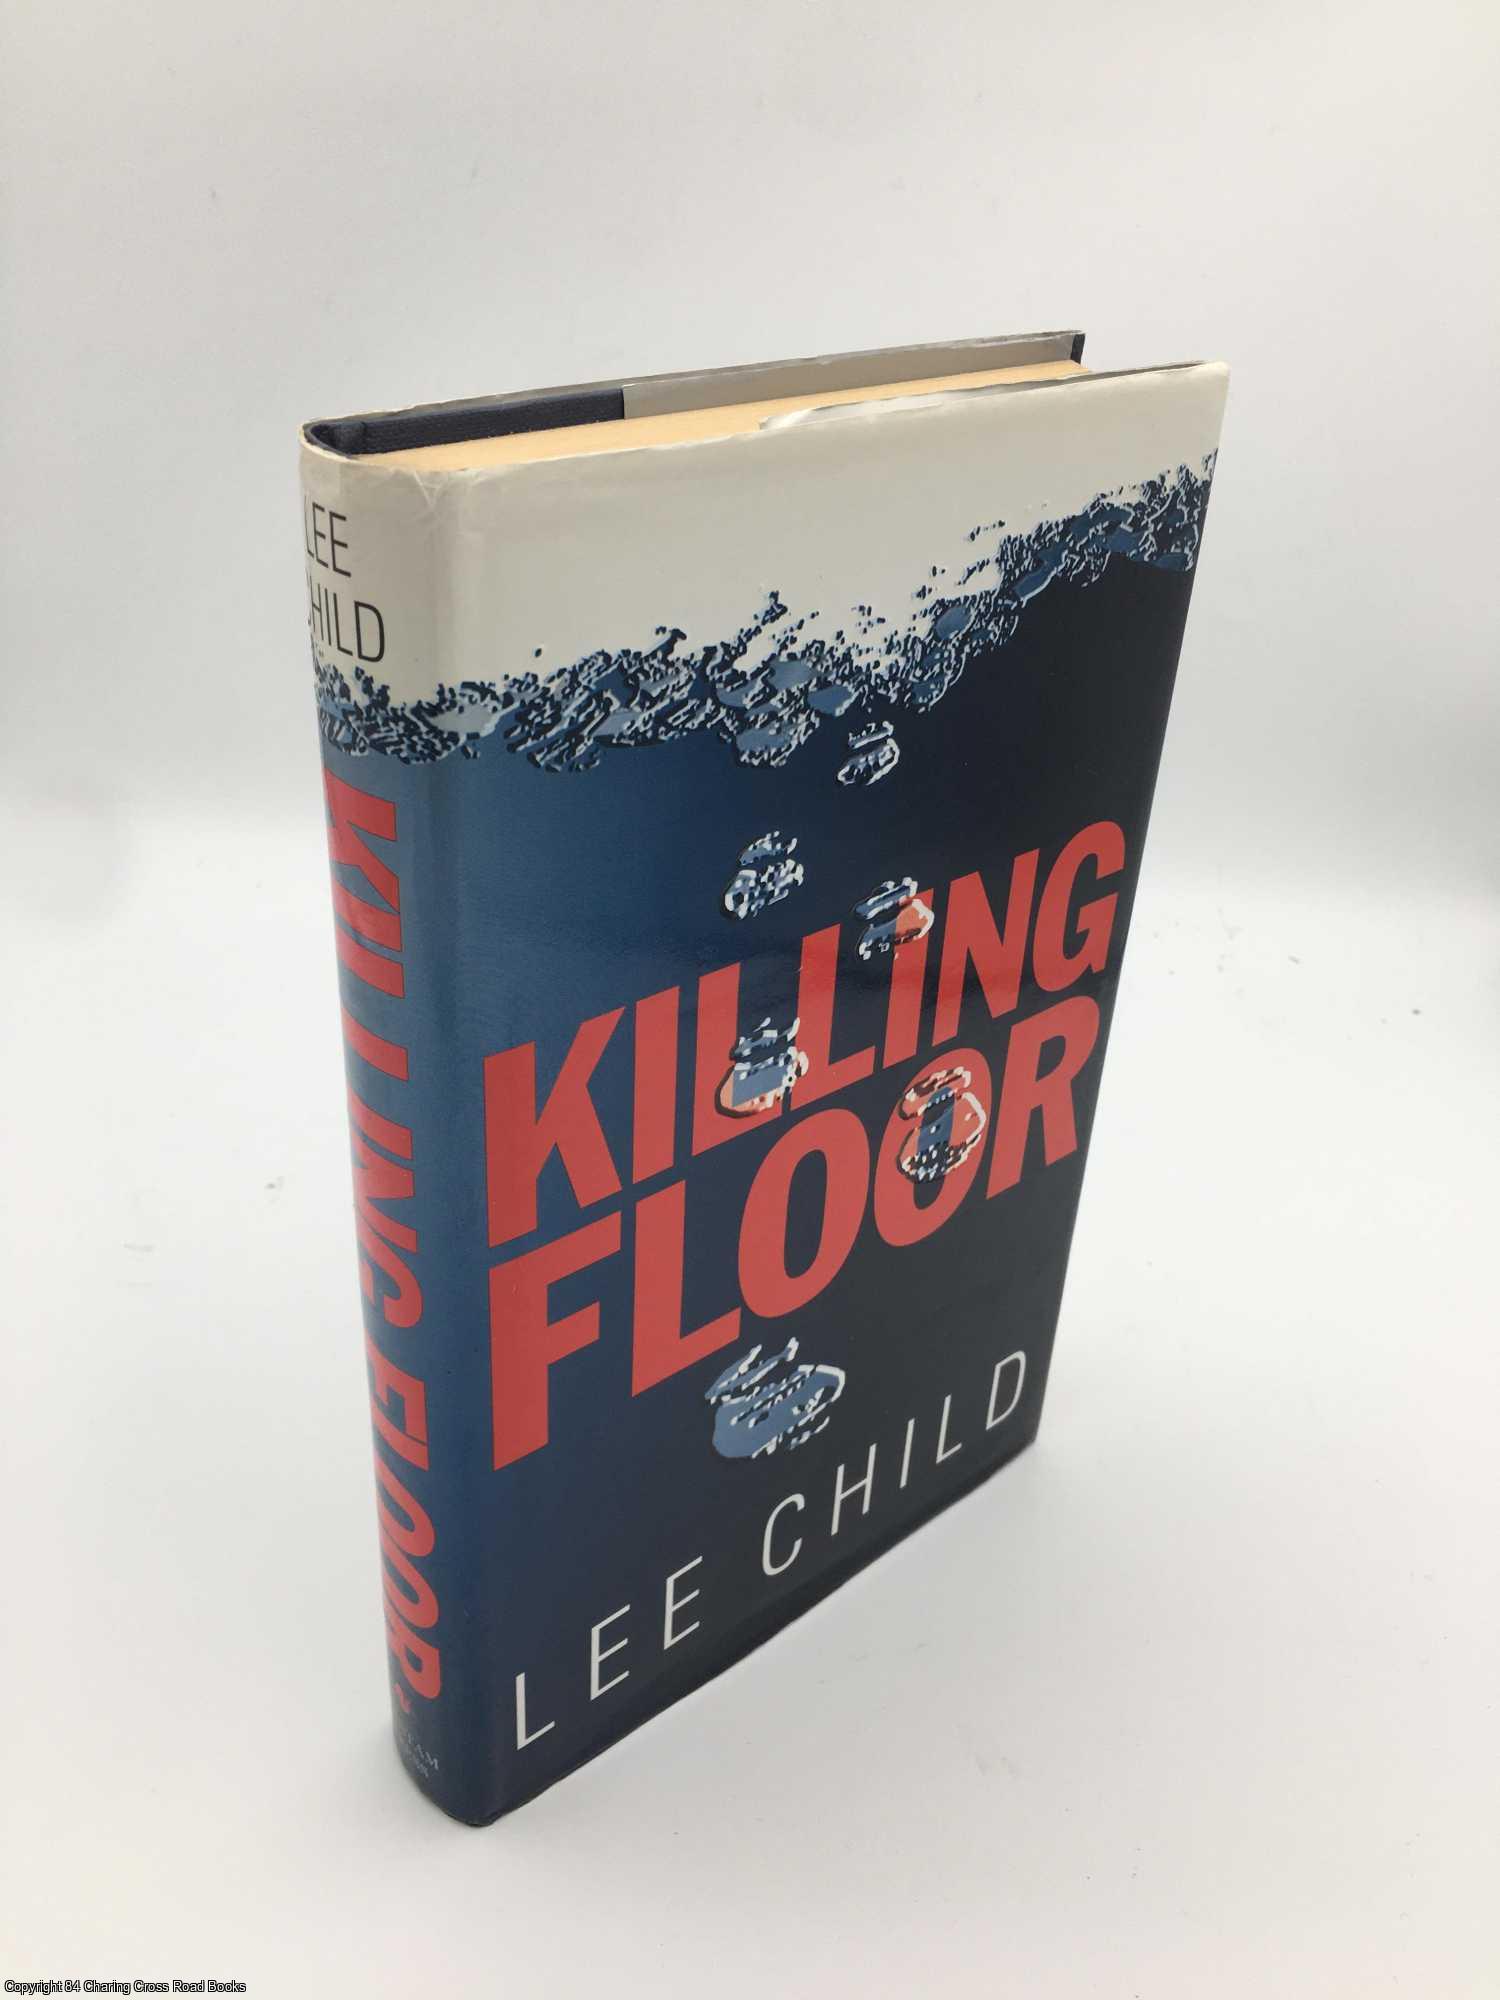 Child, Lee - The Killing Floor